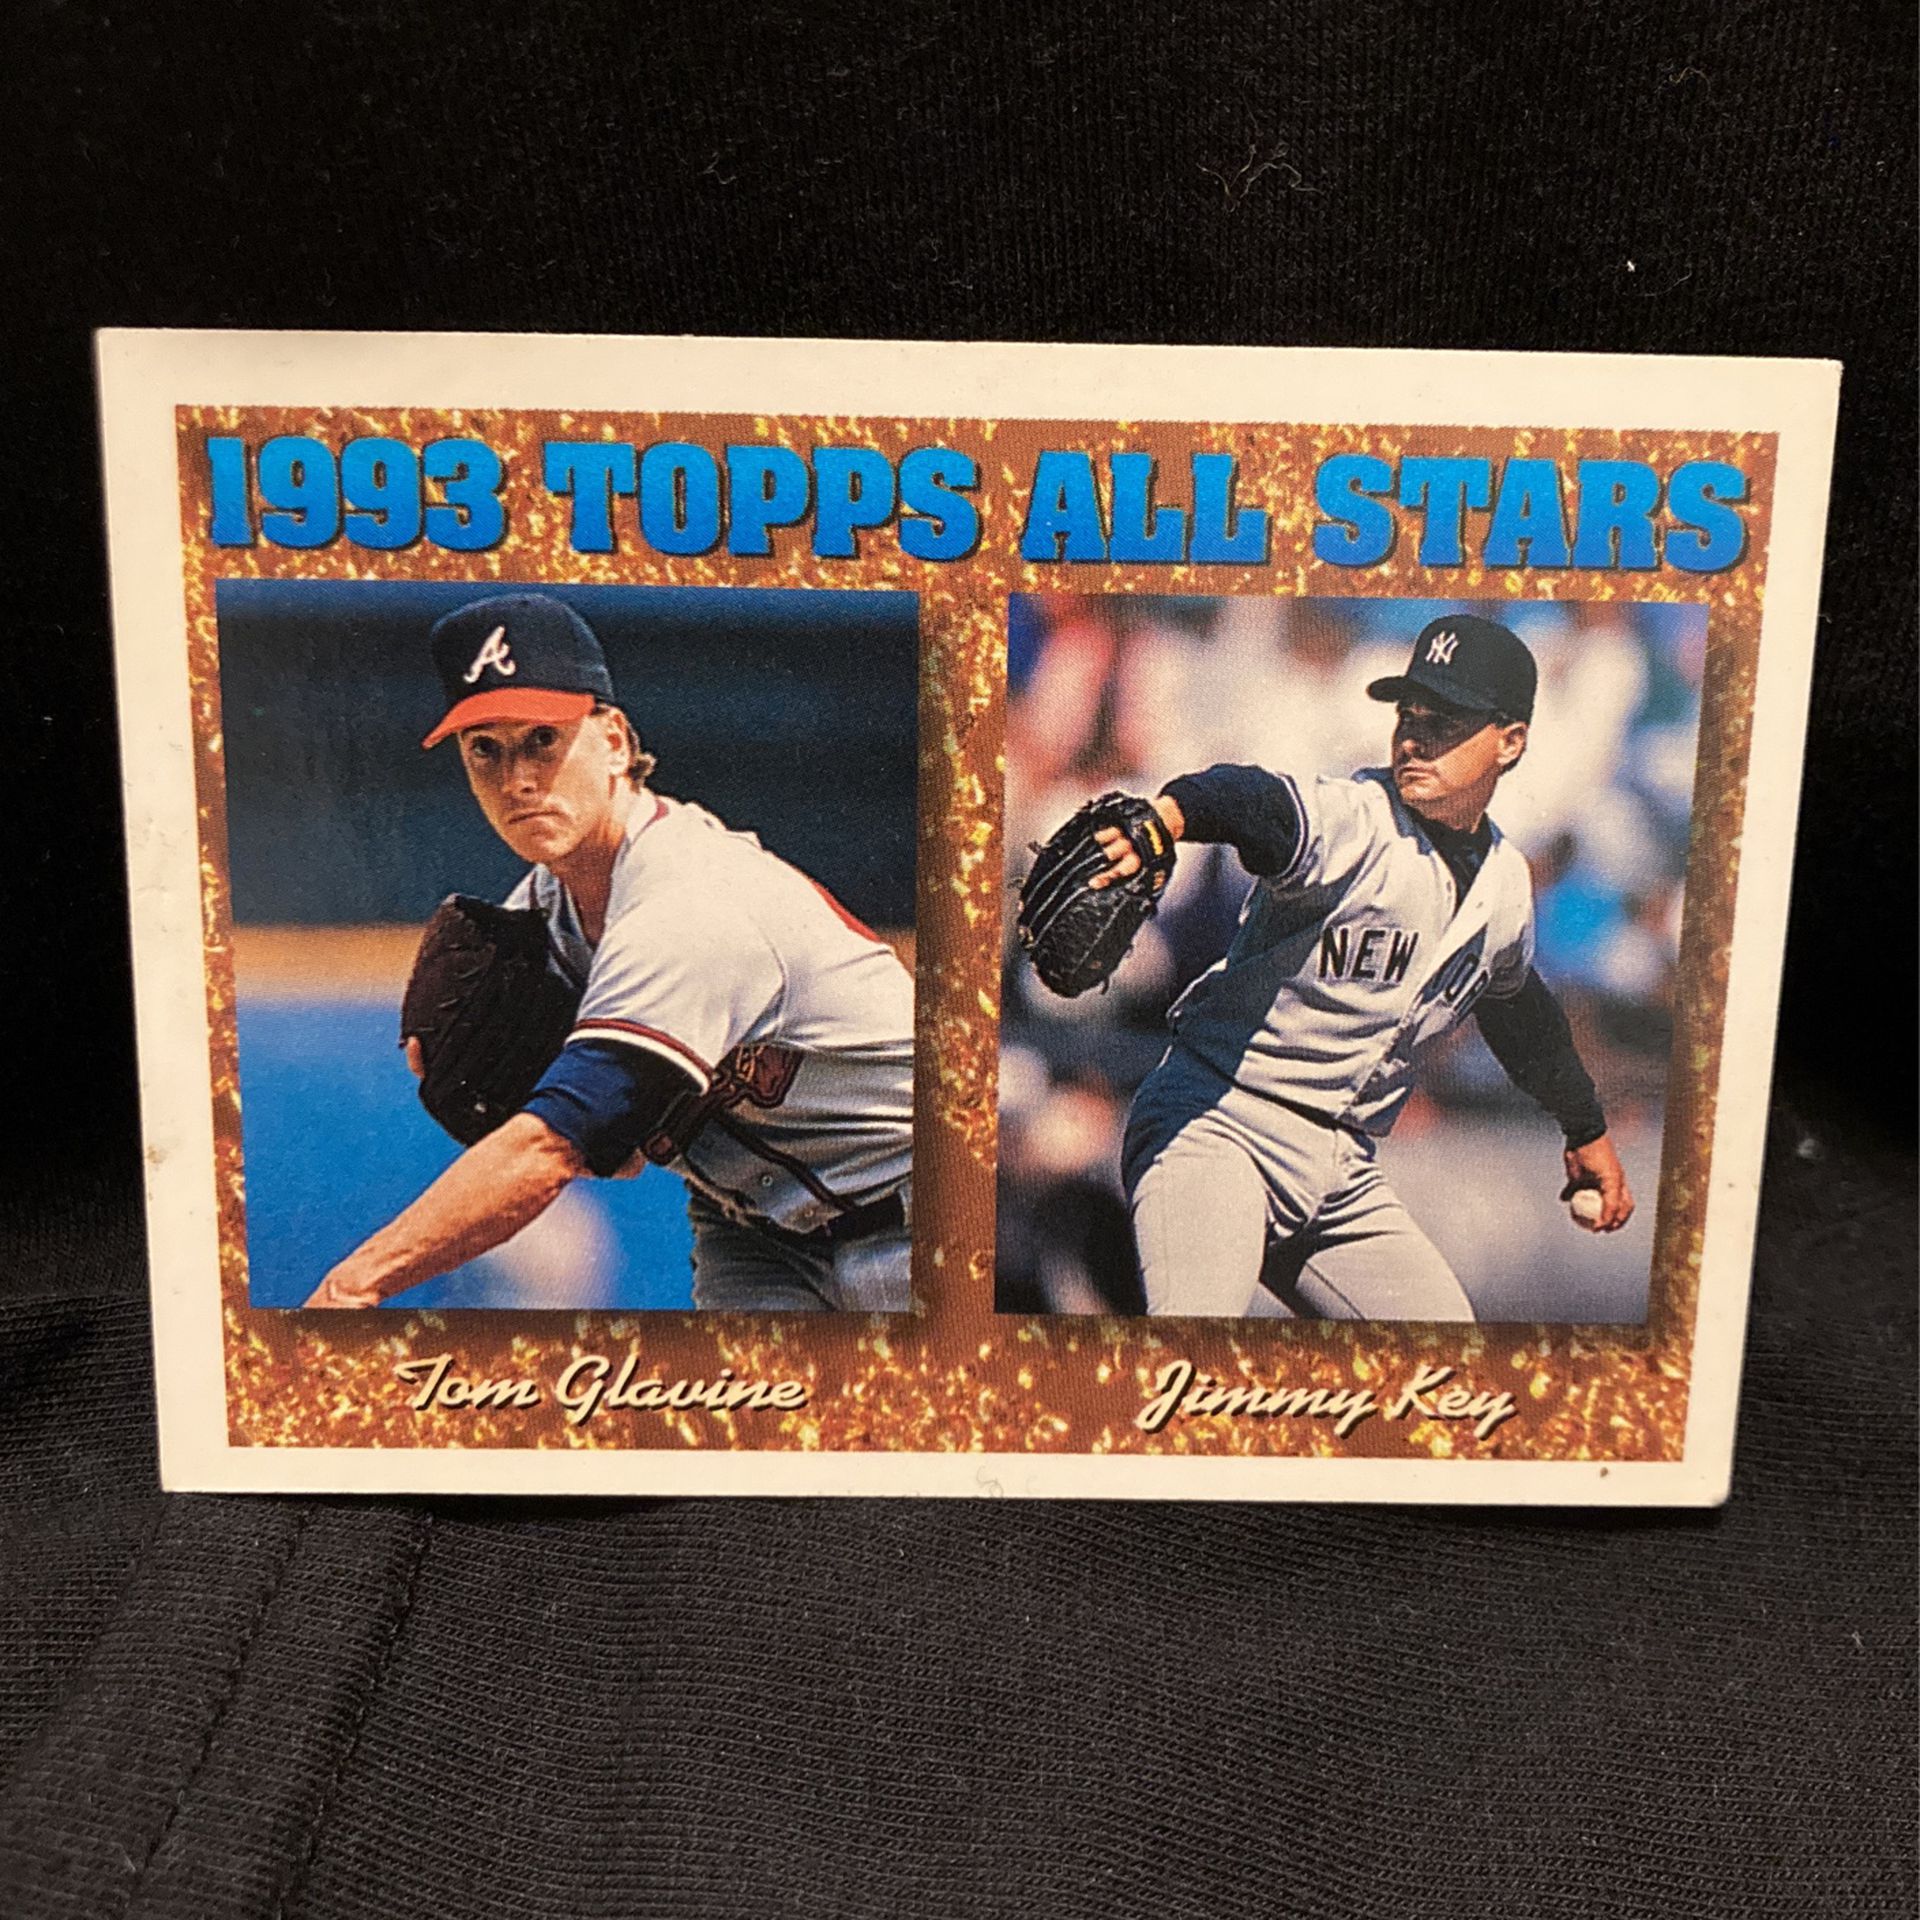 1993 Tops All Stars Baseball Card